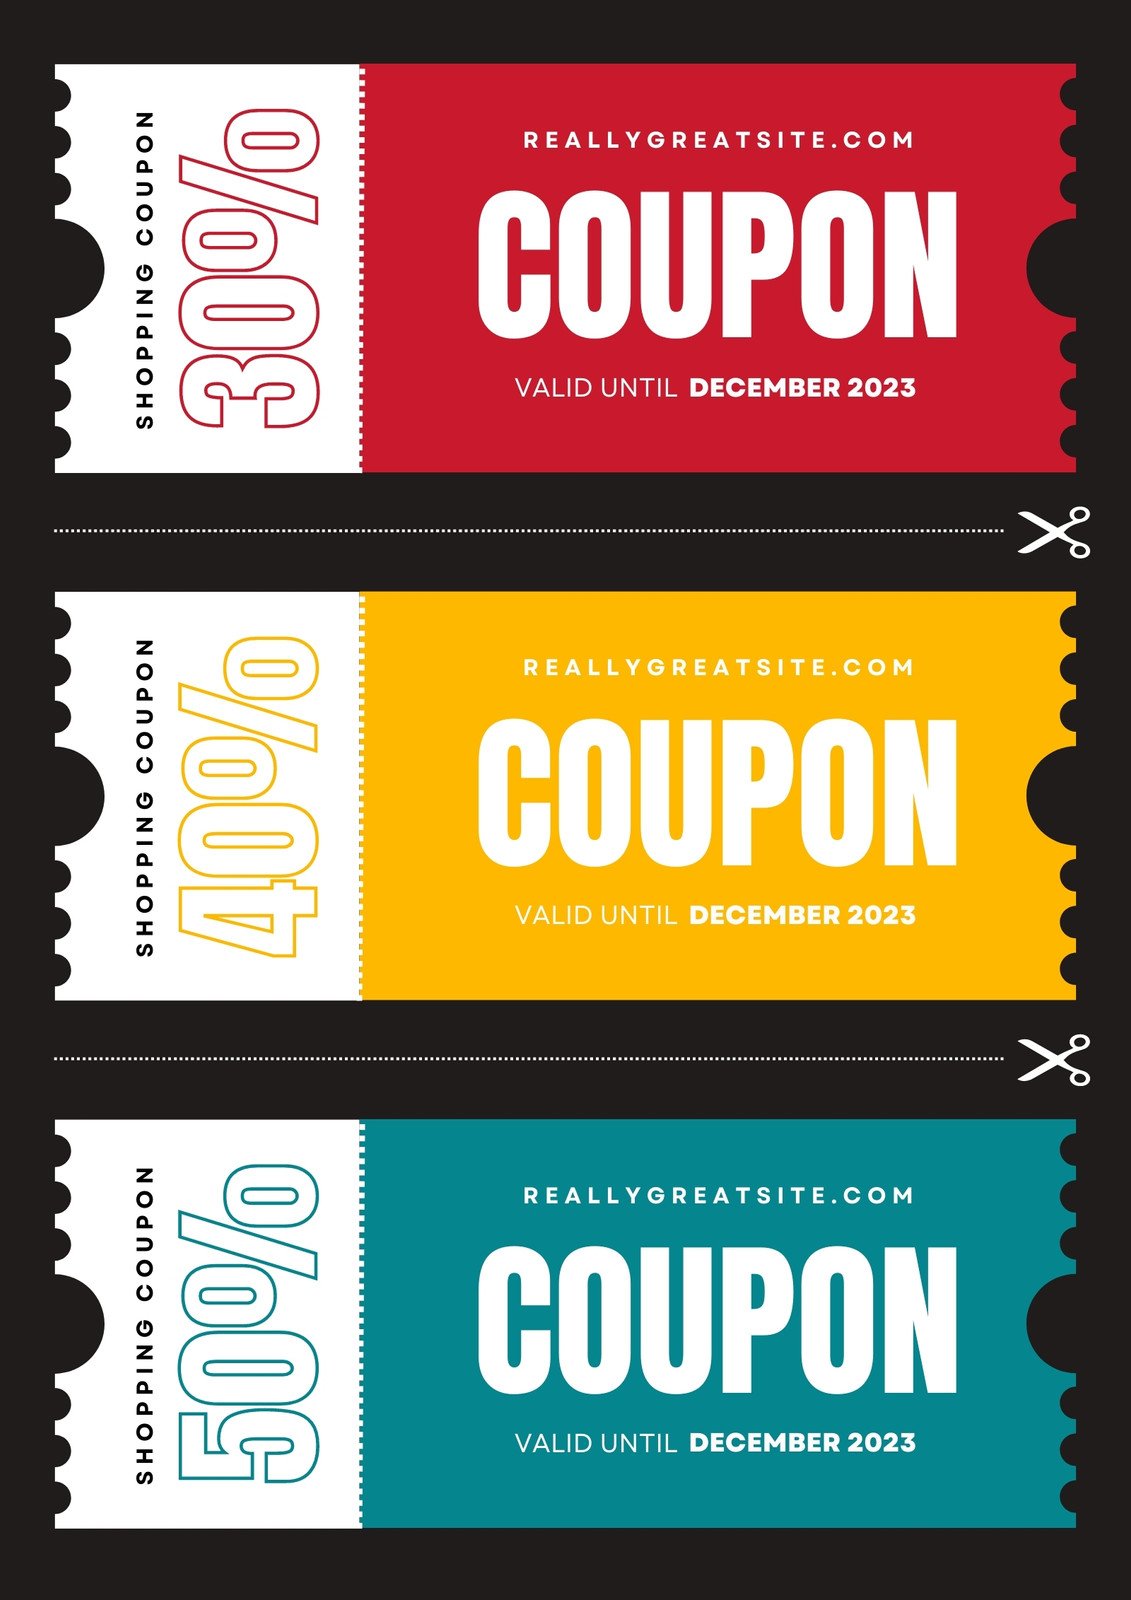 Online discount coupons